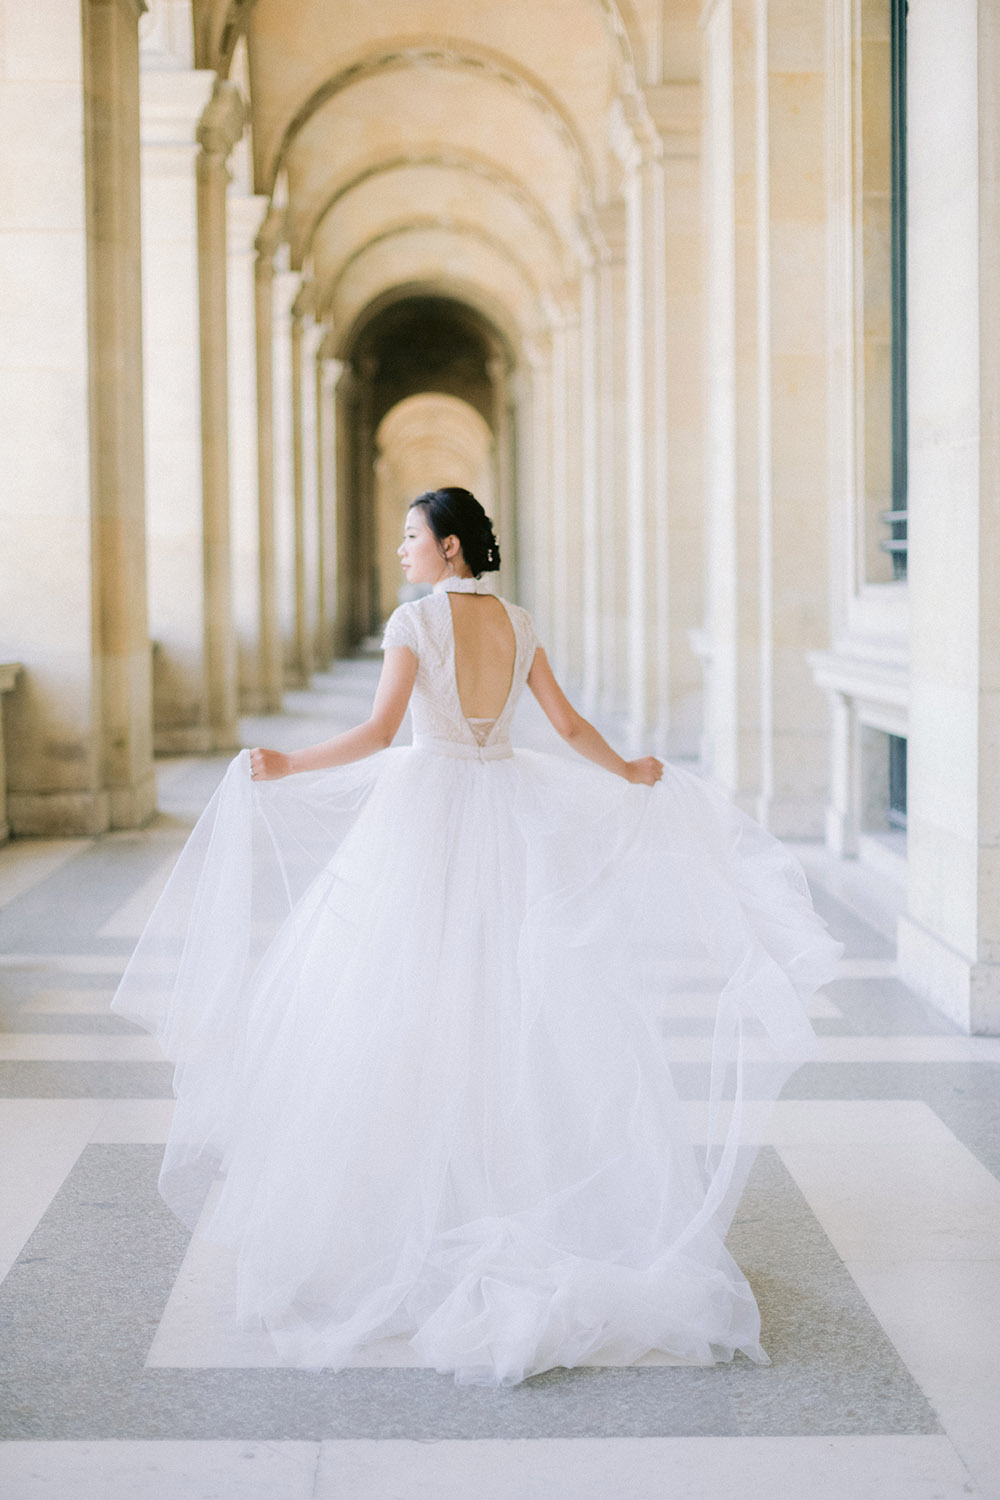 a bride run with a beautiful wedding dress